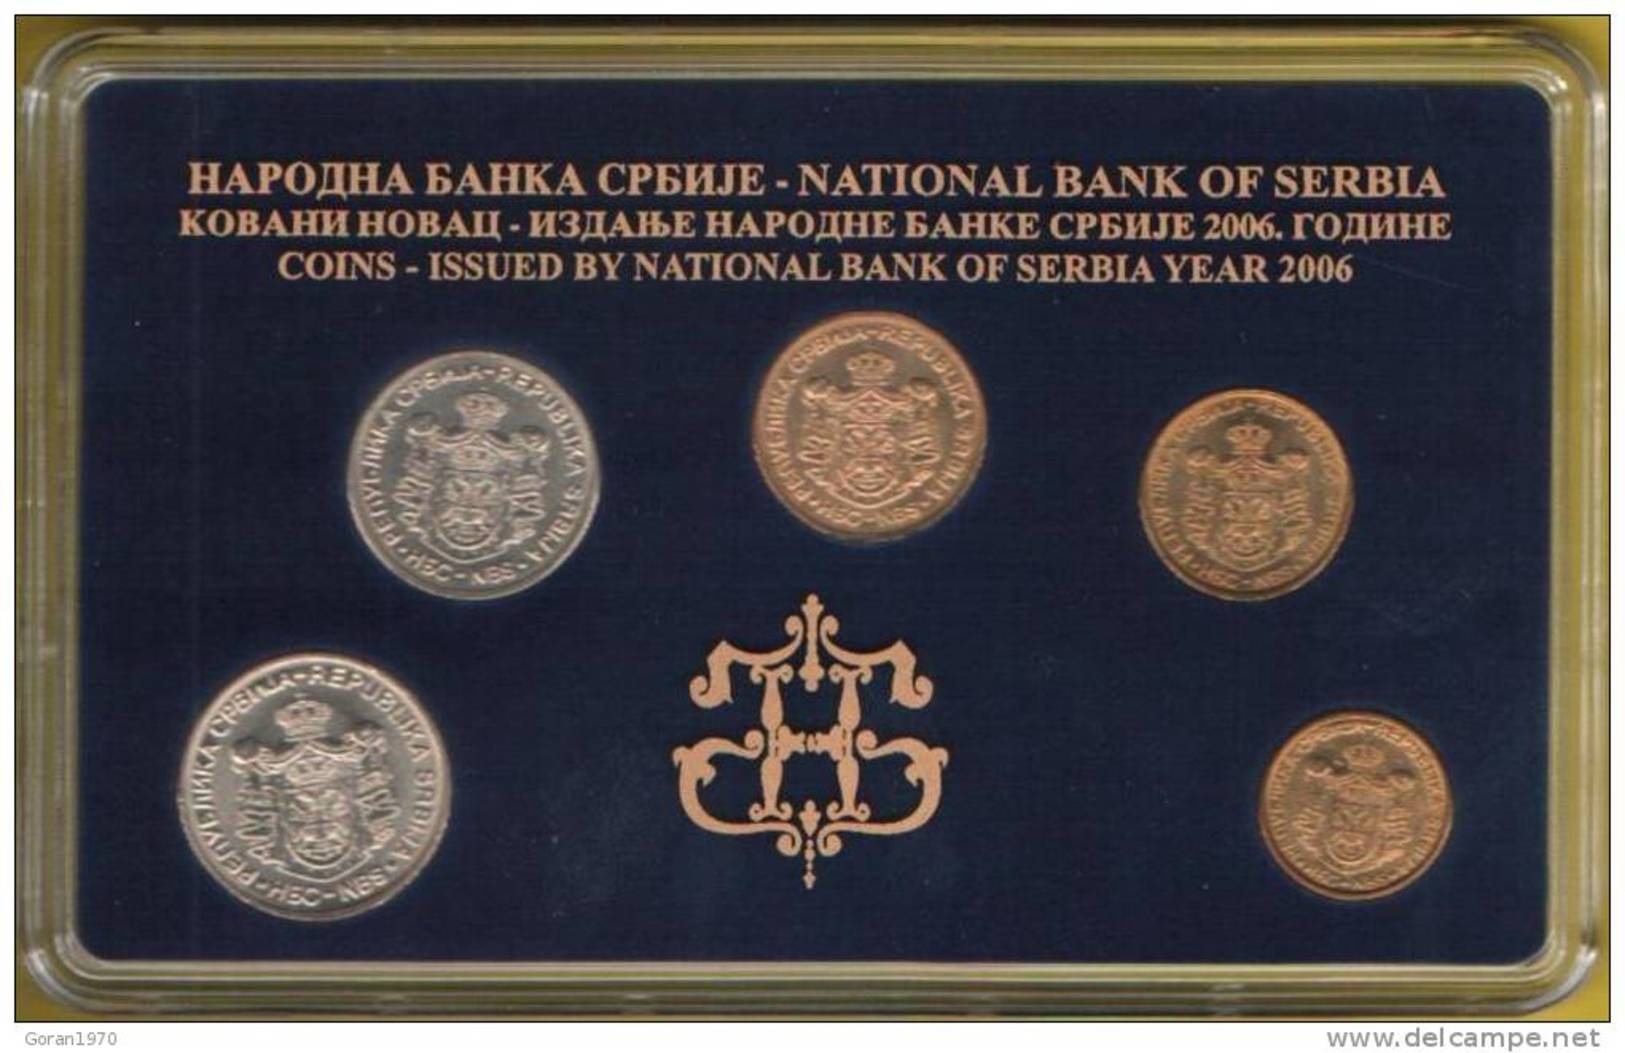 Serbia Coins Set 2006. UNC, NATIONAL BANK OF SERBIA, 20 Dinara Commemorative Nikola Tesla - Serbia